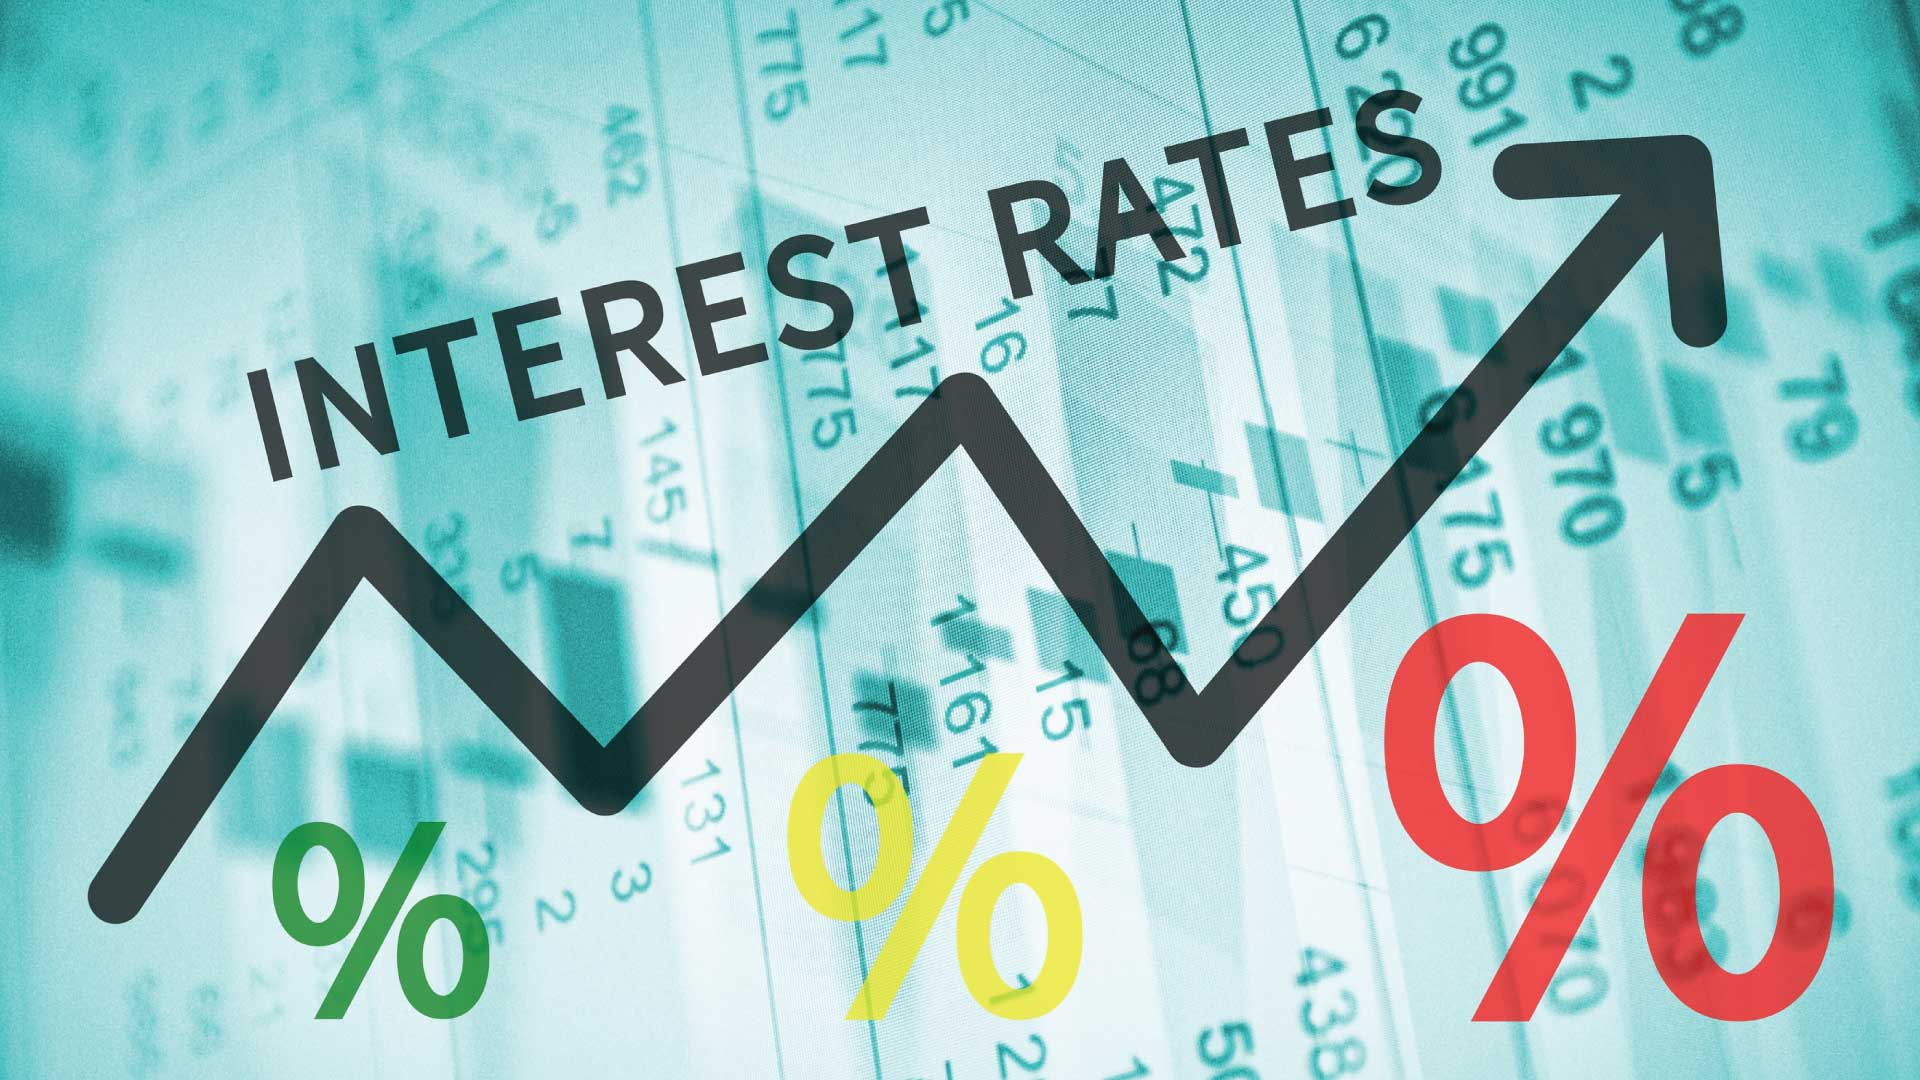 SBV decreases regulatory interest rates by 0.5-1%